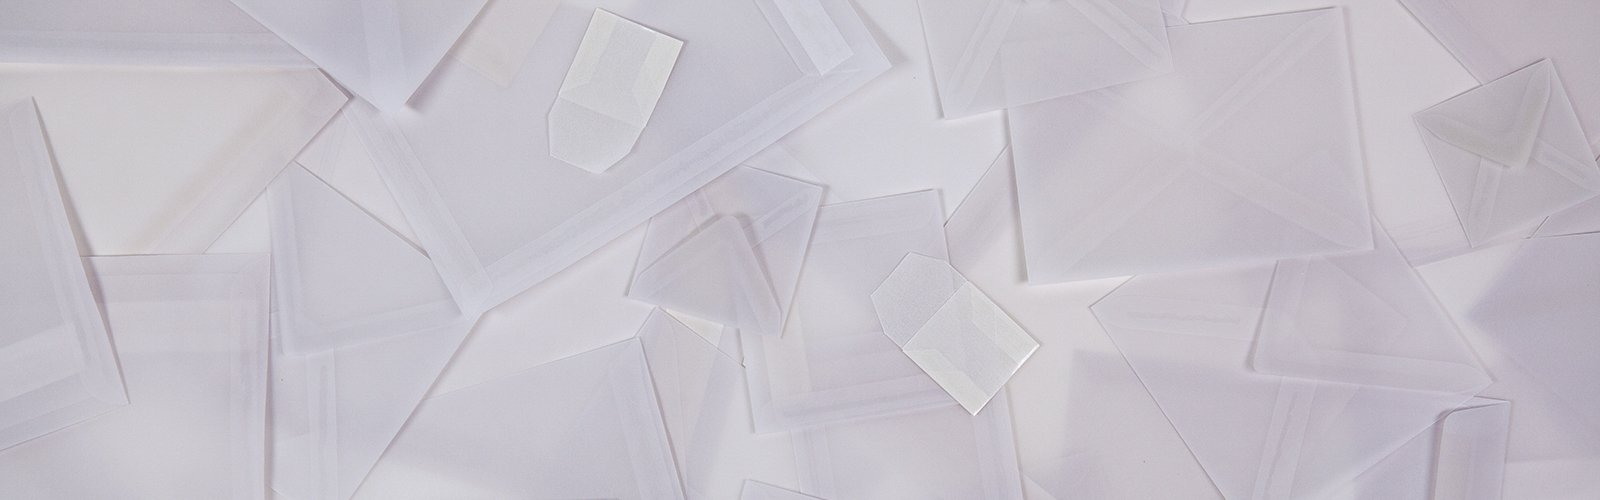 Enveloppes transparentes blanches